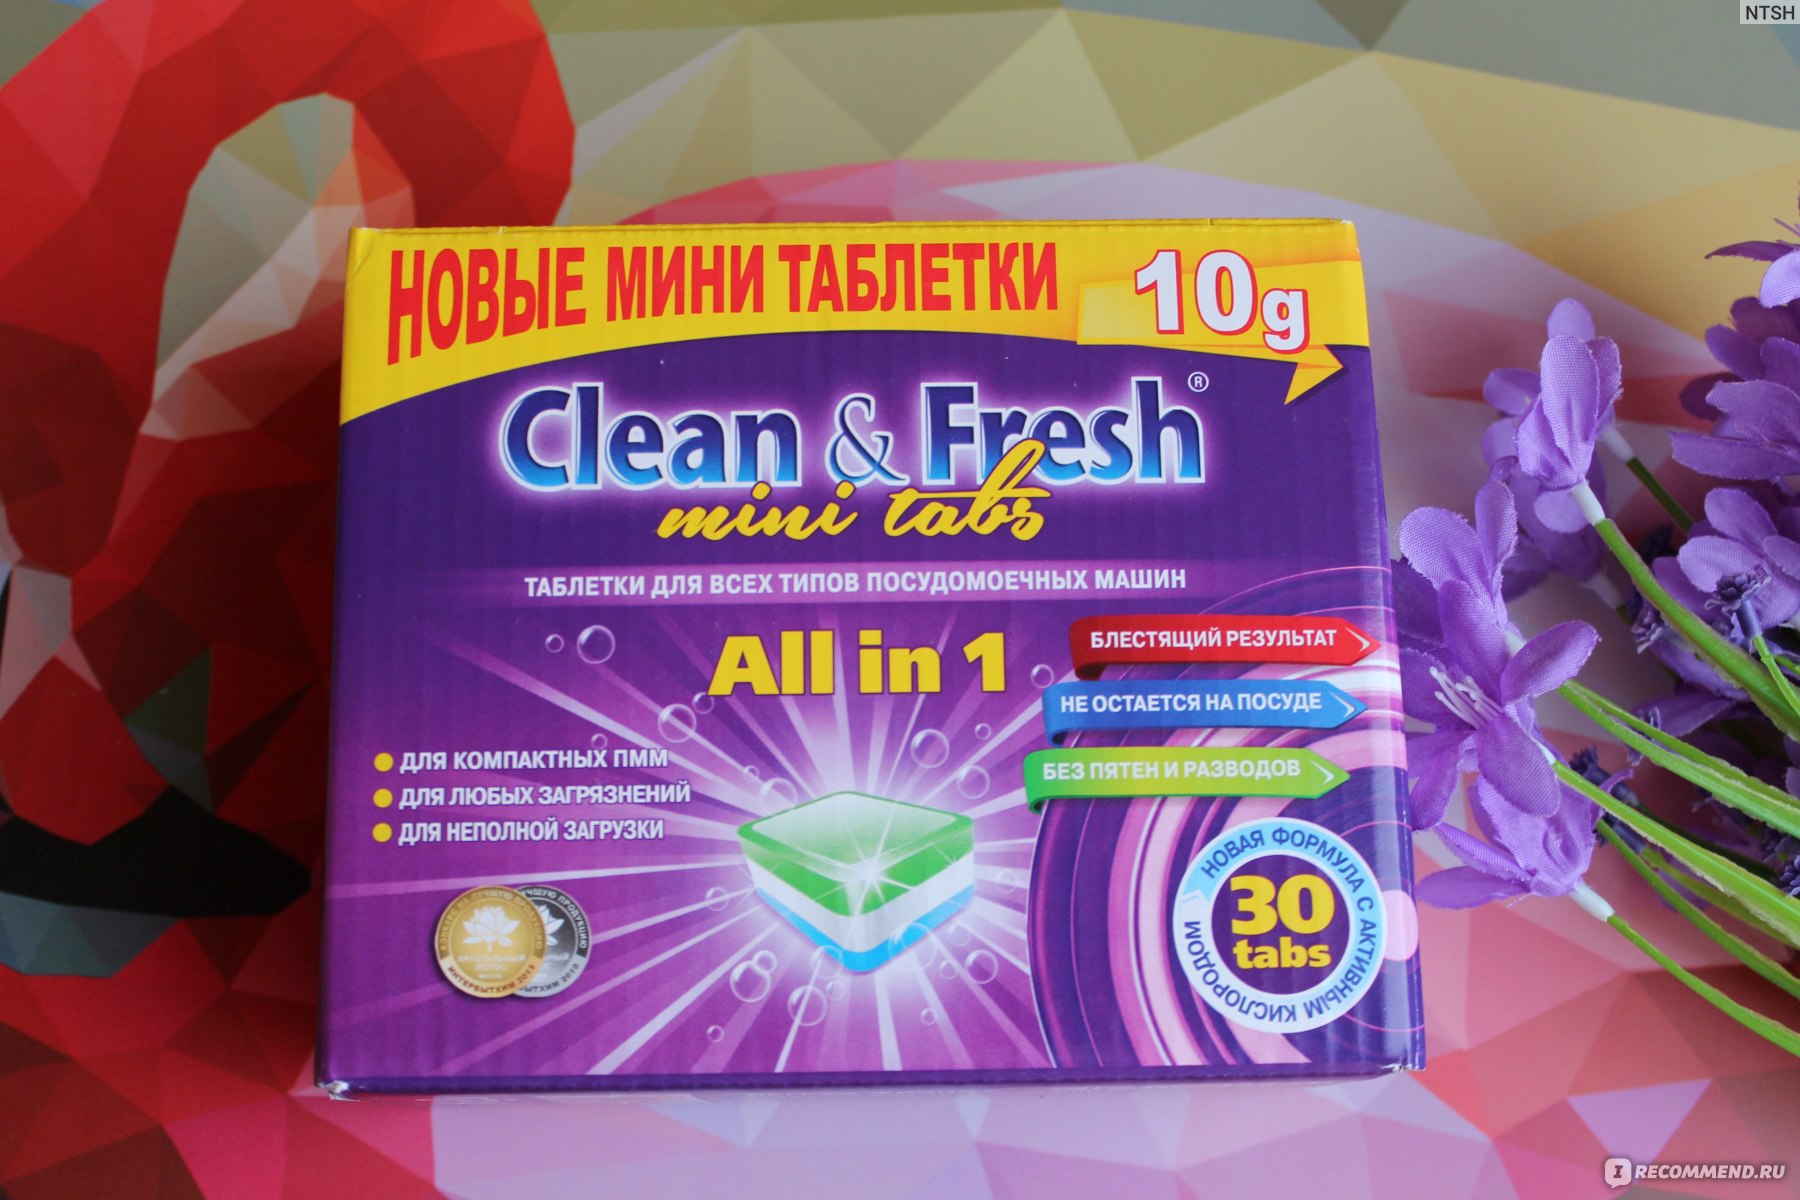 Dequine fresh clean текст. Таблетки для ПММ "clean&Fresh" allin1 Mini Tabs 200 штук. Таблетки для ПММ "clean&Fresh" allin1 (Mini) 15 штук. Таблетки для ПММ "clean&Fresh" allin1 (Mega) 60 штук. Таблетки для ПММ "clean&Fresh" allin1 Mini Tabs (Mega) 60 штук.